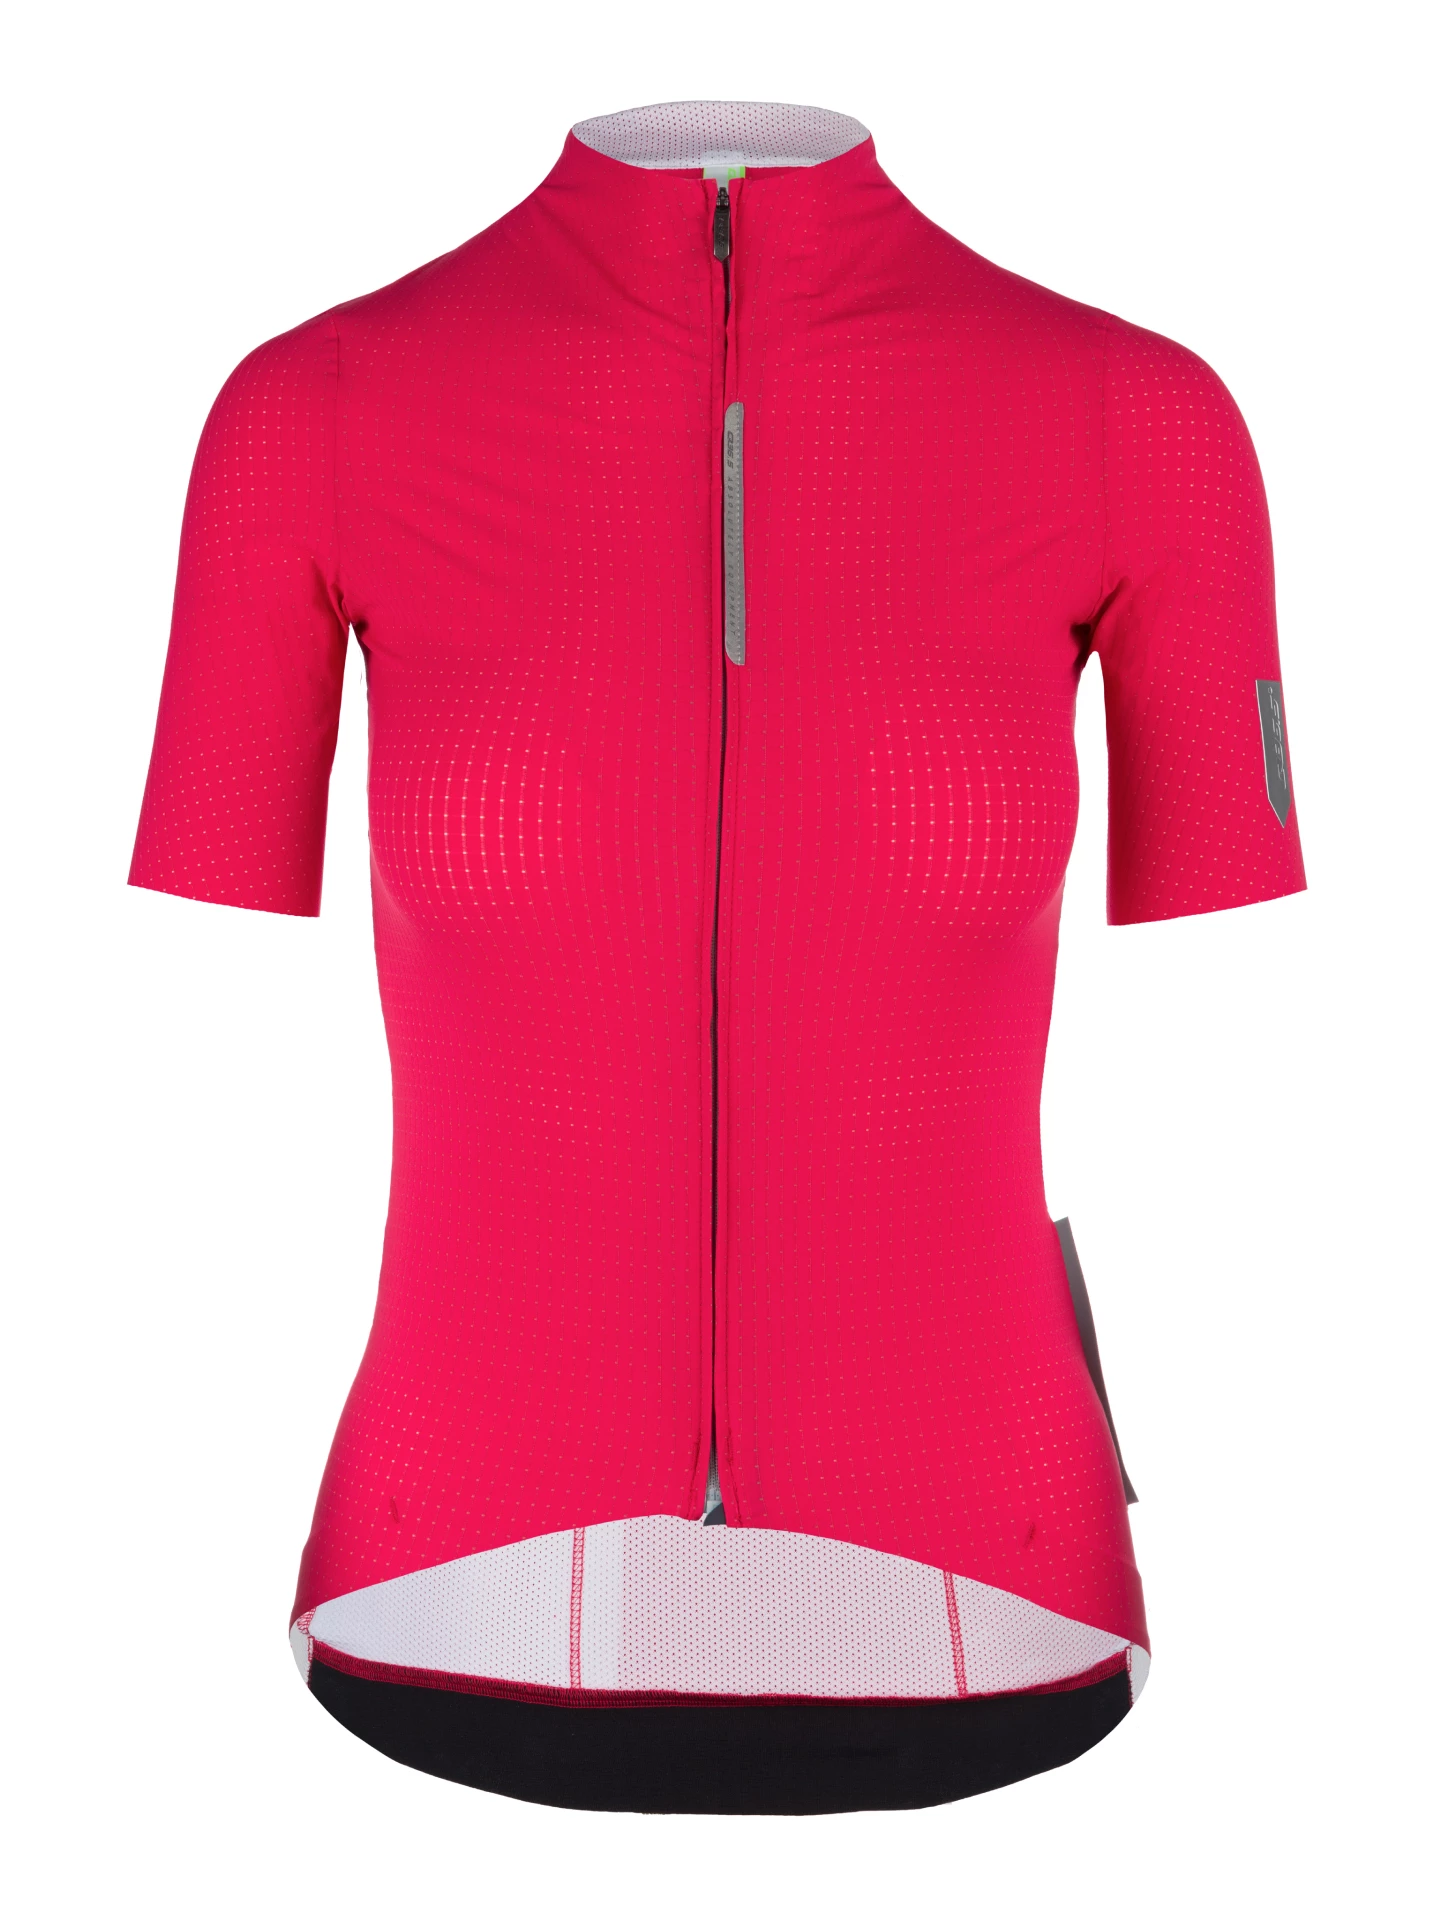 Womens cycling jerseys, road bike and gravel shirts • Q36.5